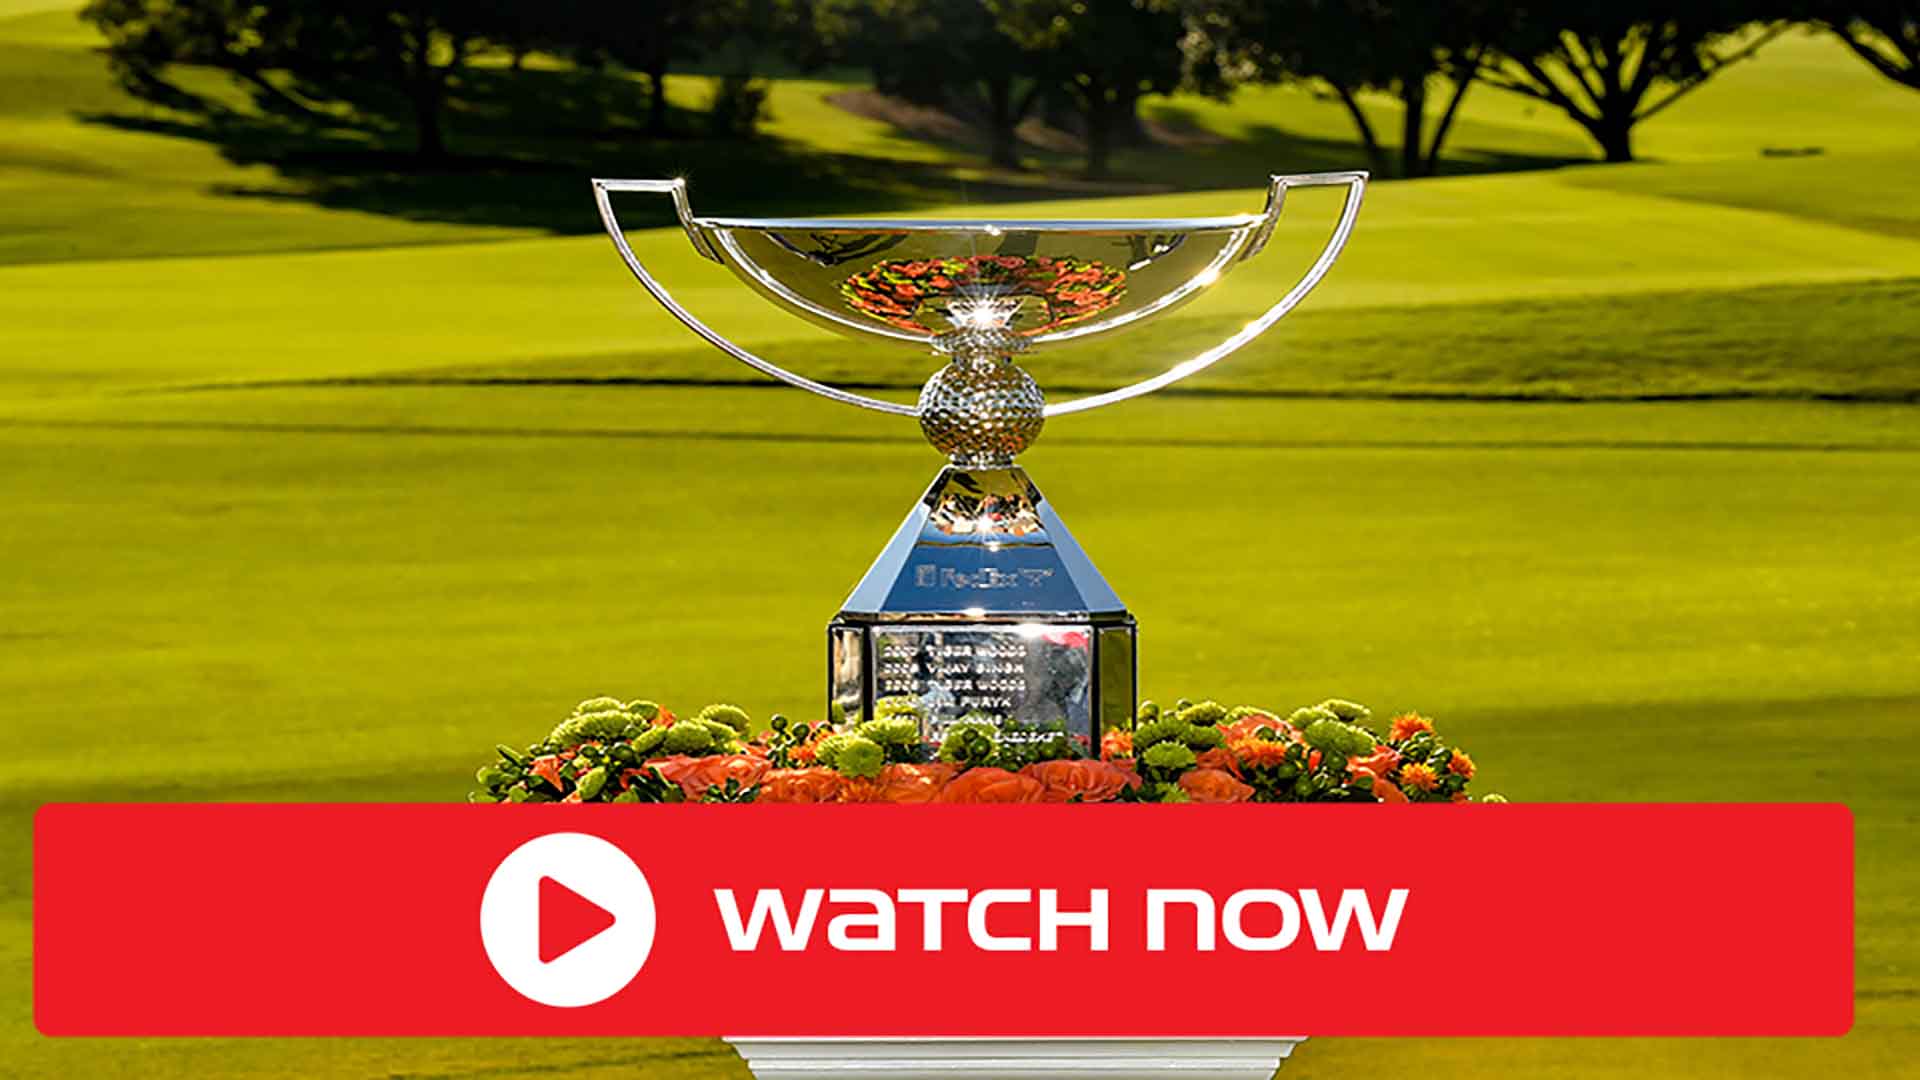 [PGA] Tour Championship 2021 Coverage Live Stream, Watch Online, TV